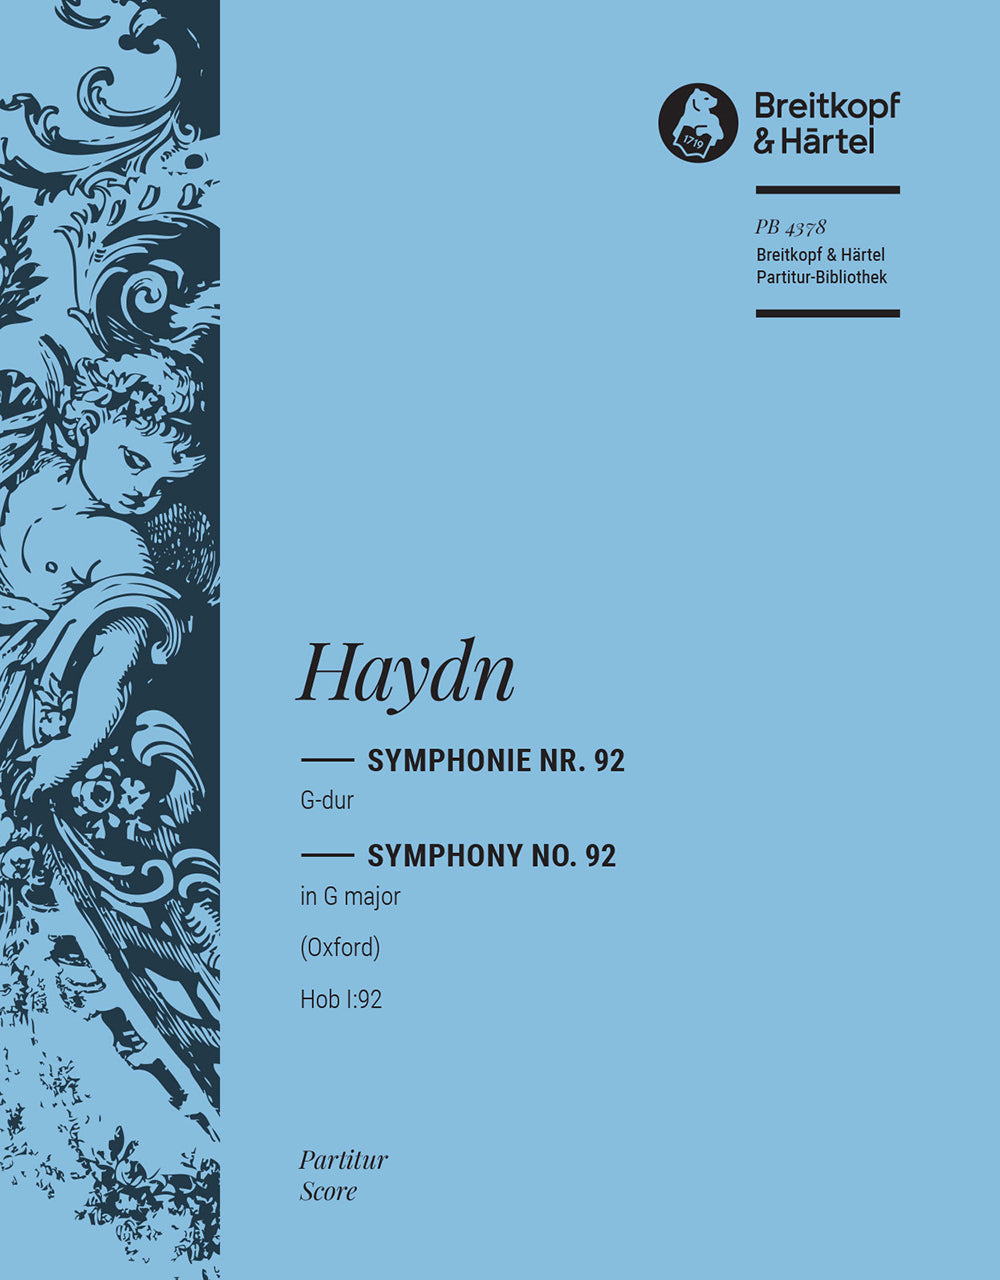 Haydn Symphony No 92 in G major Hob I:92 Full score